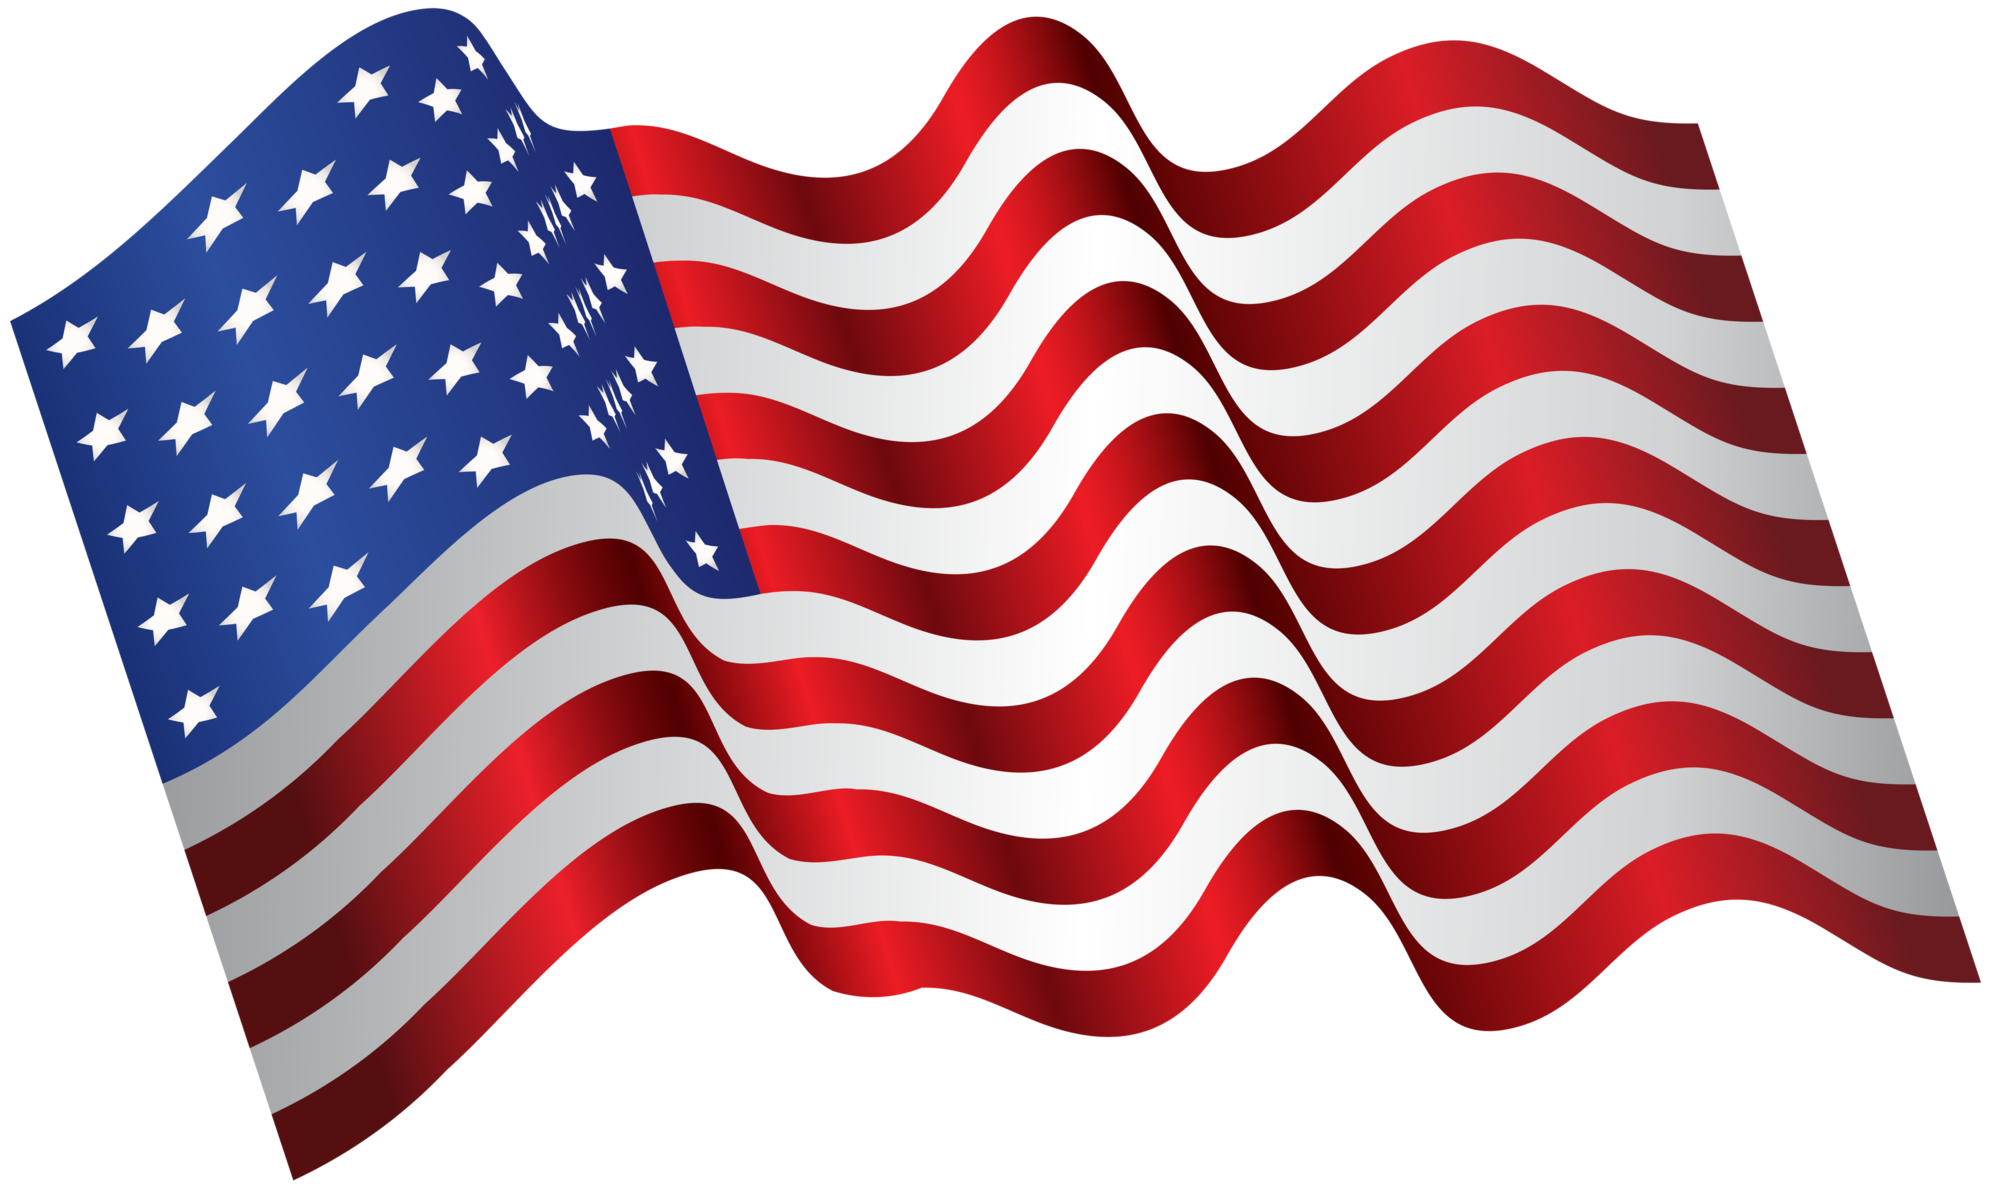 USA America Waving Flag PNG Clip Art Image